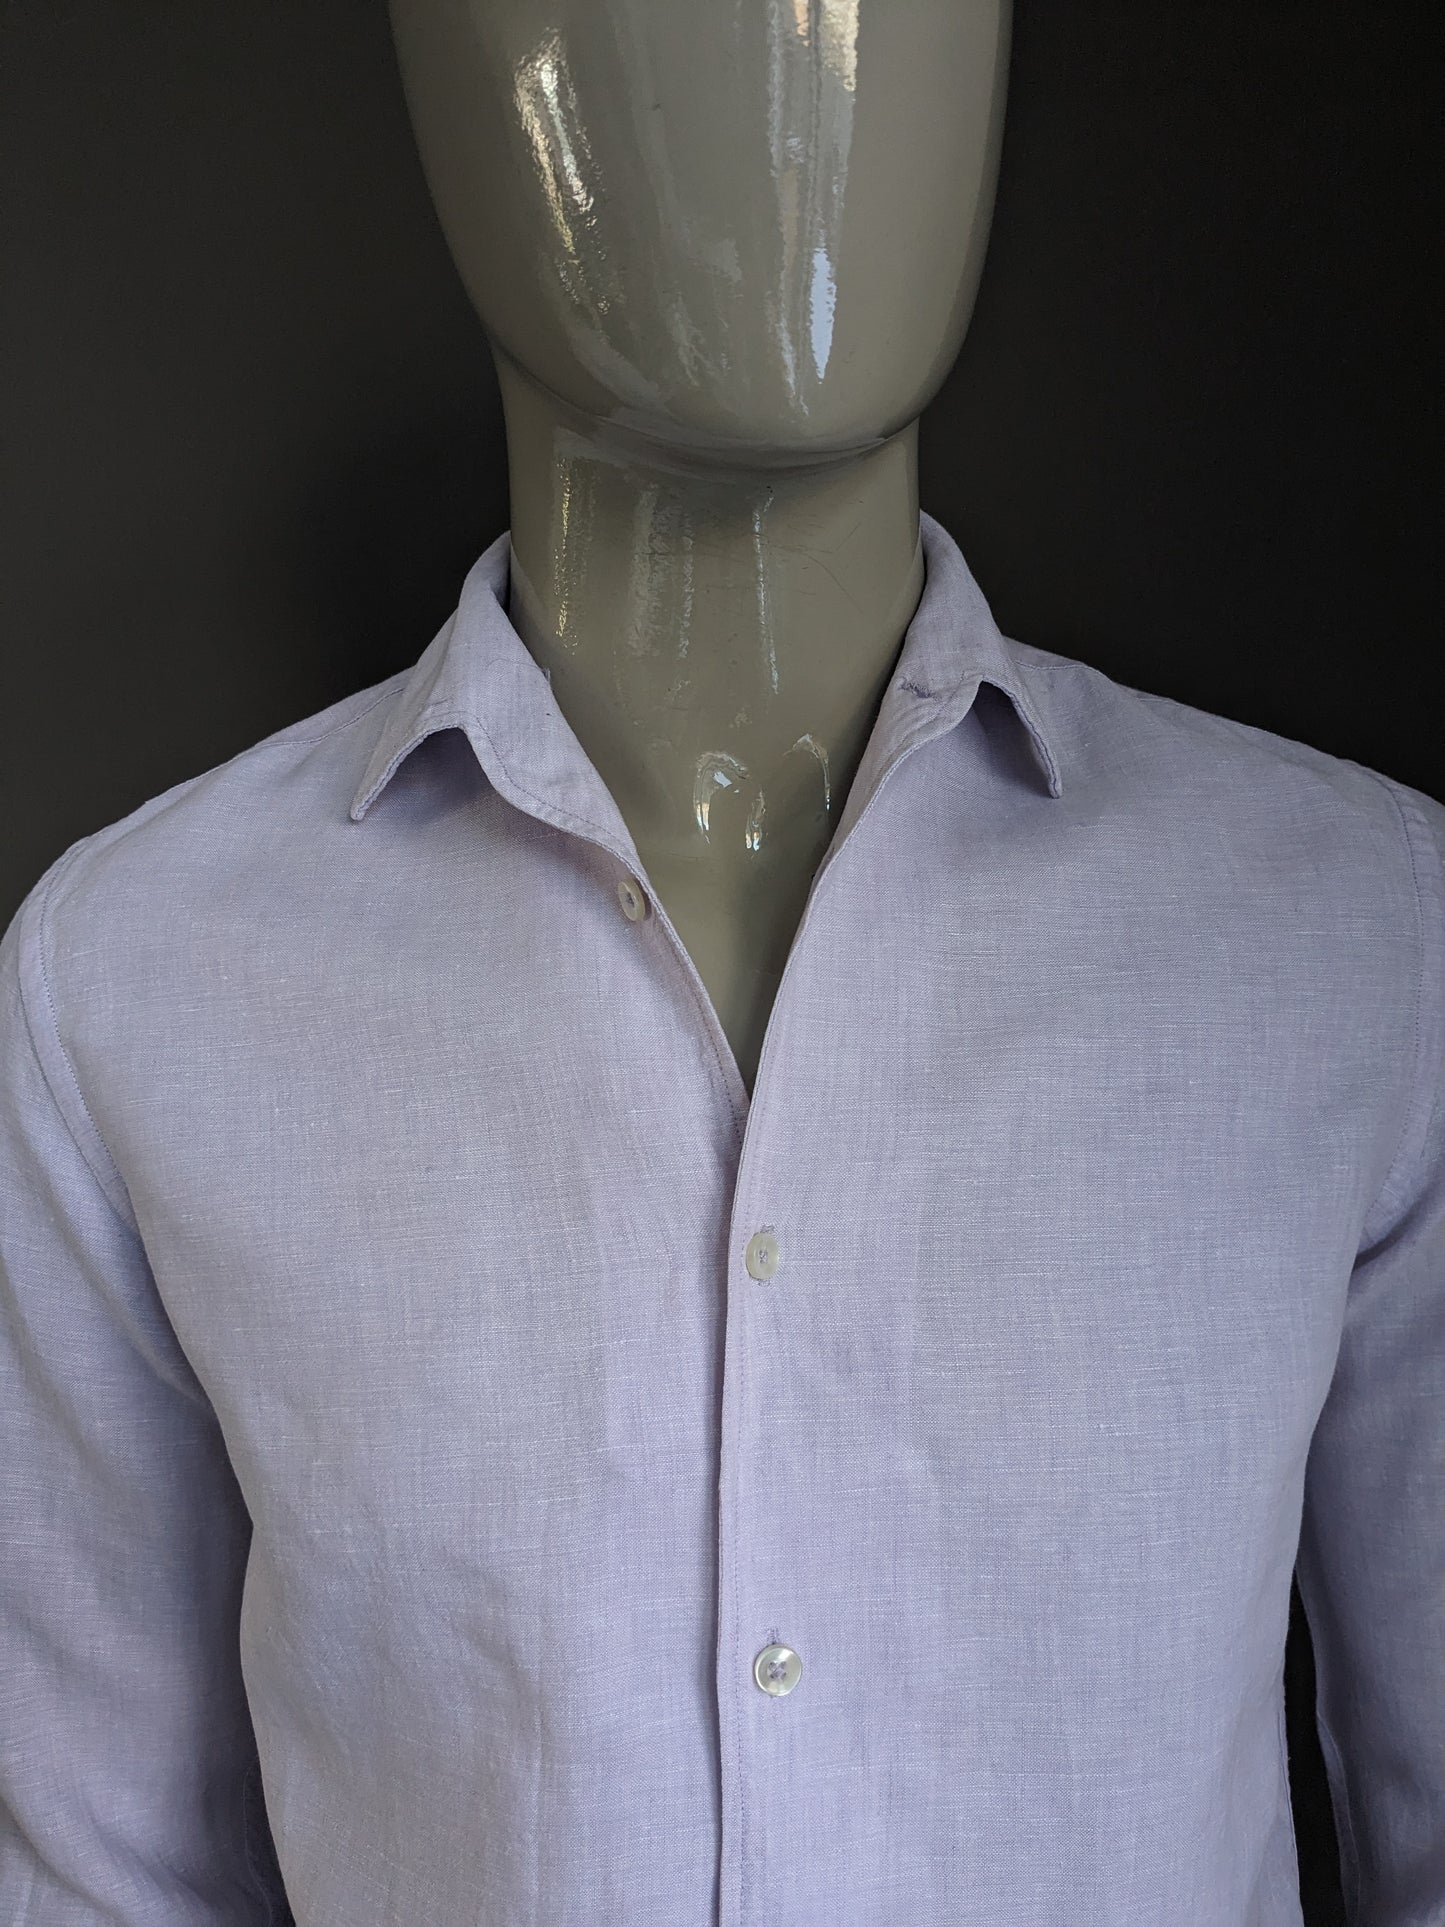 Mango man linen shirt. Lilac colored. Size M.